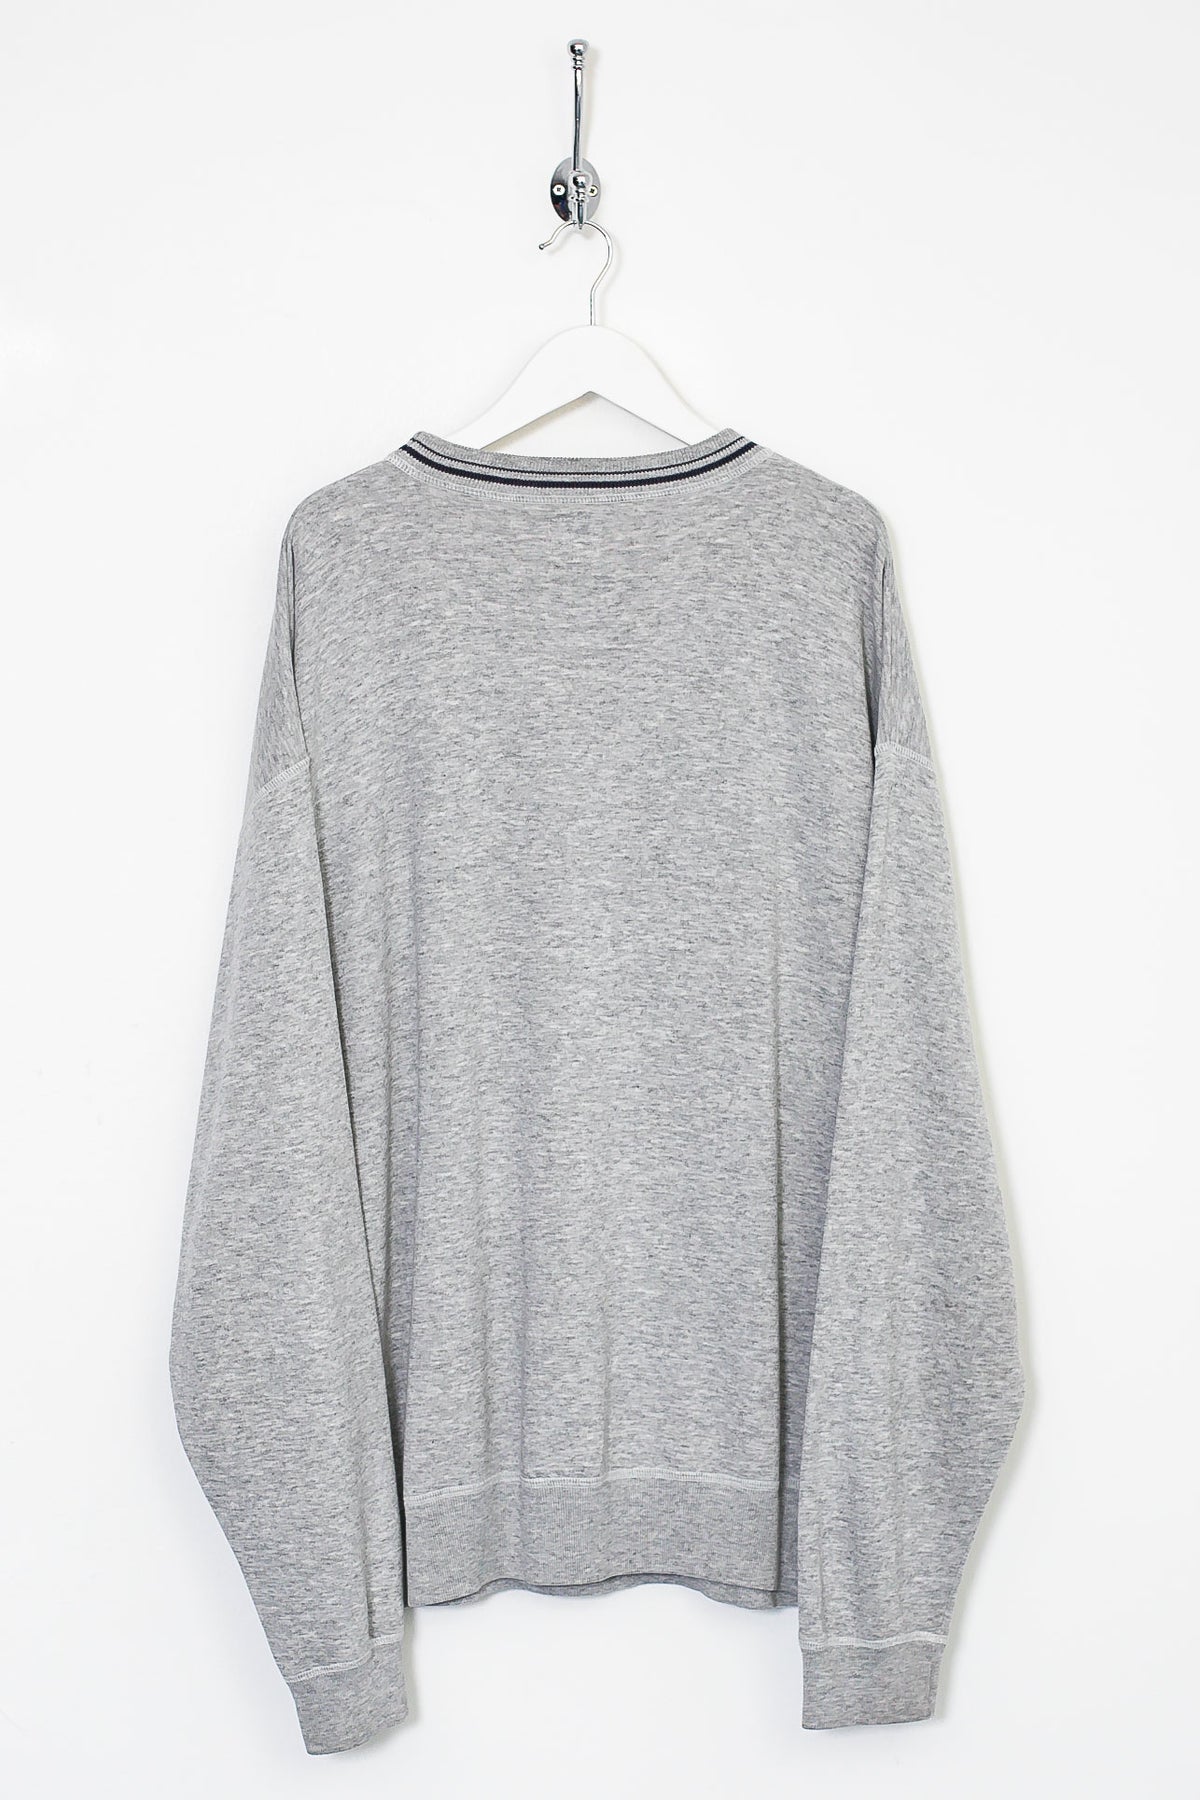 90s Levi's Sweatshirt (XL)